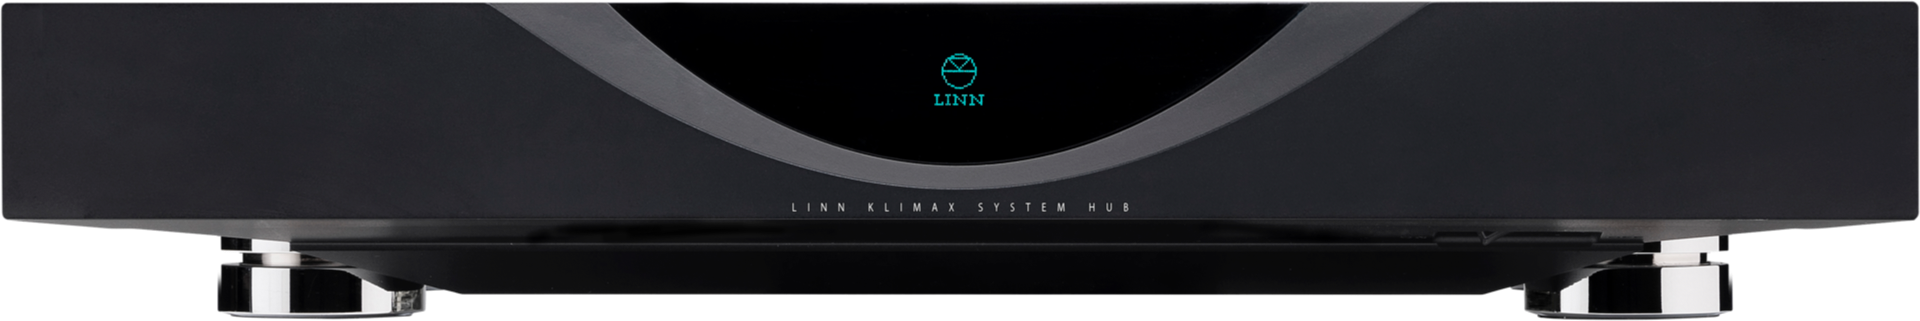 Linn Klimax System Hub